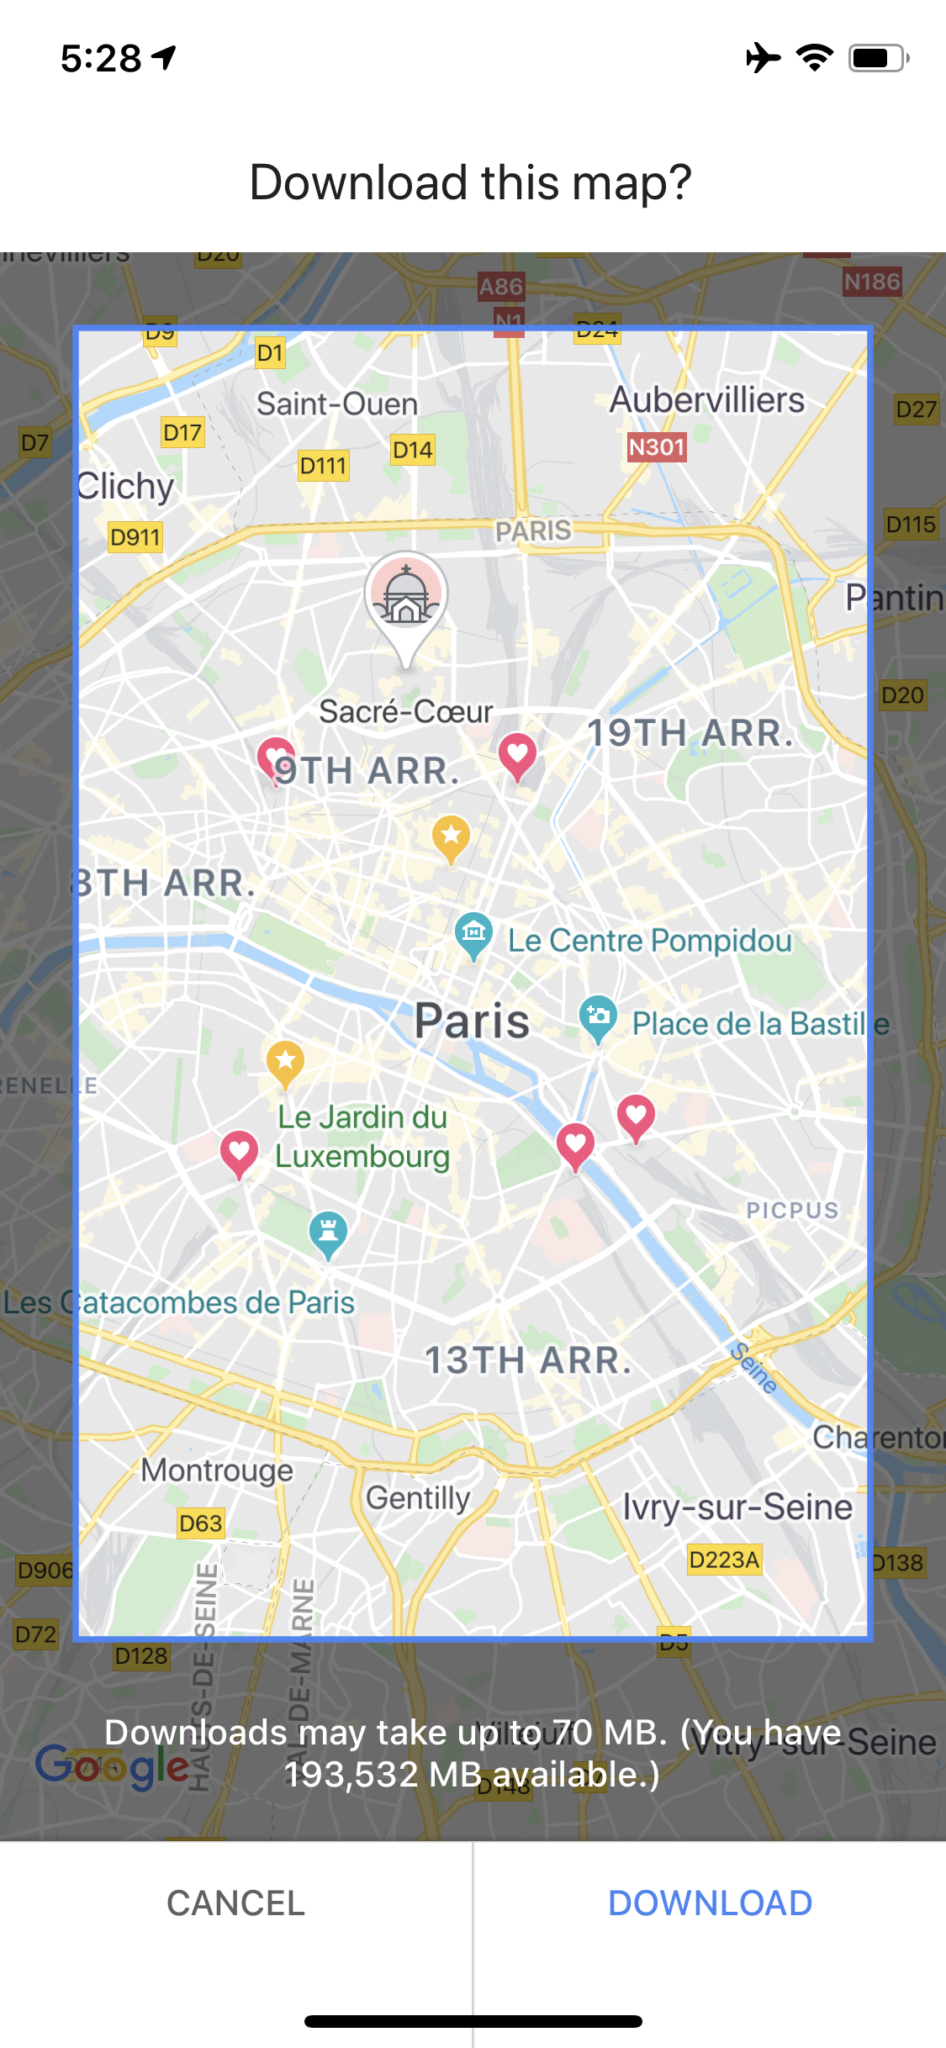 travel app in europe